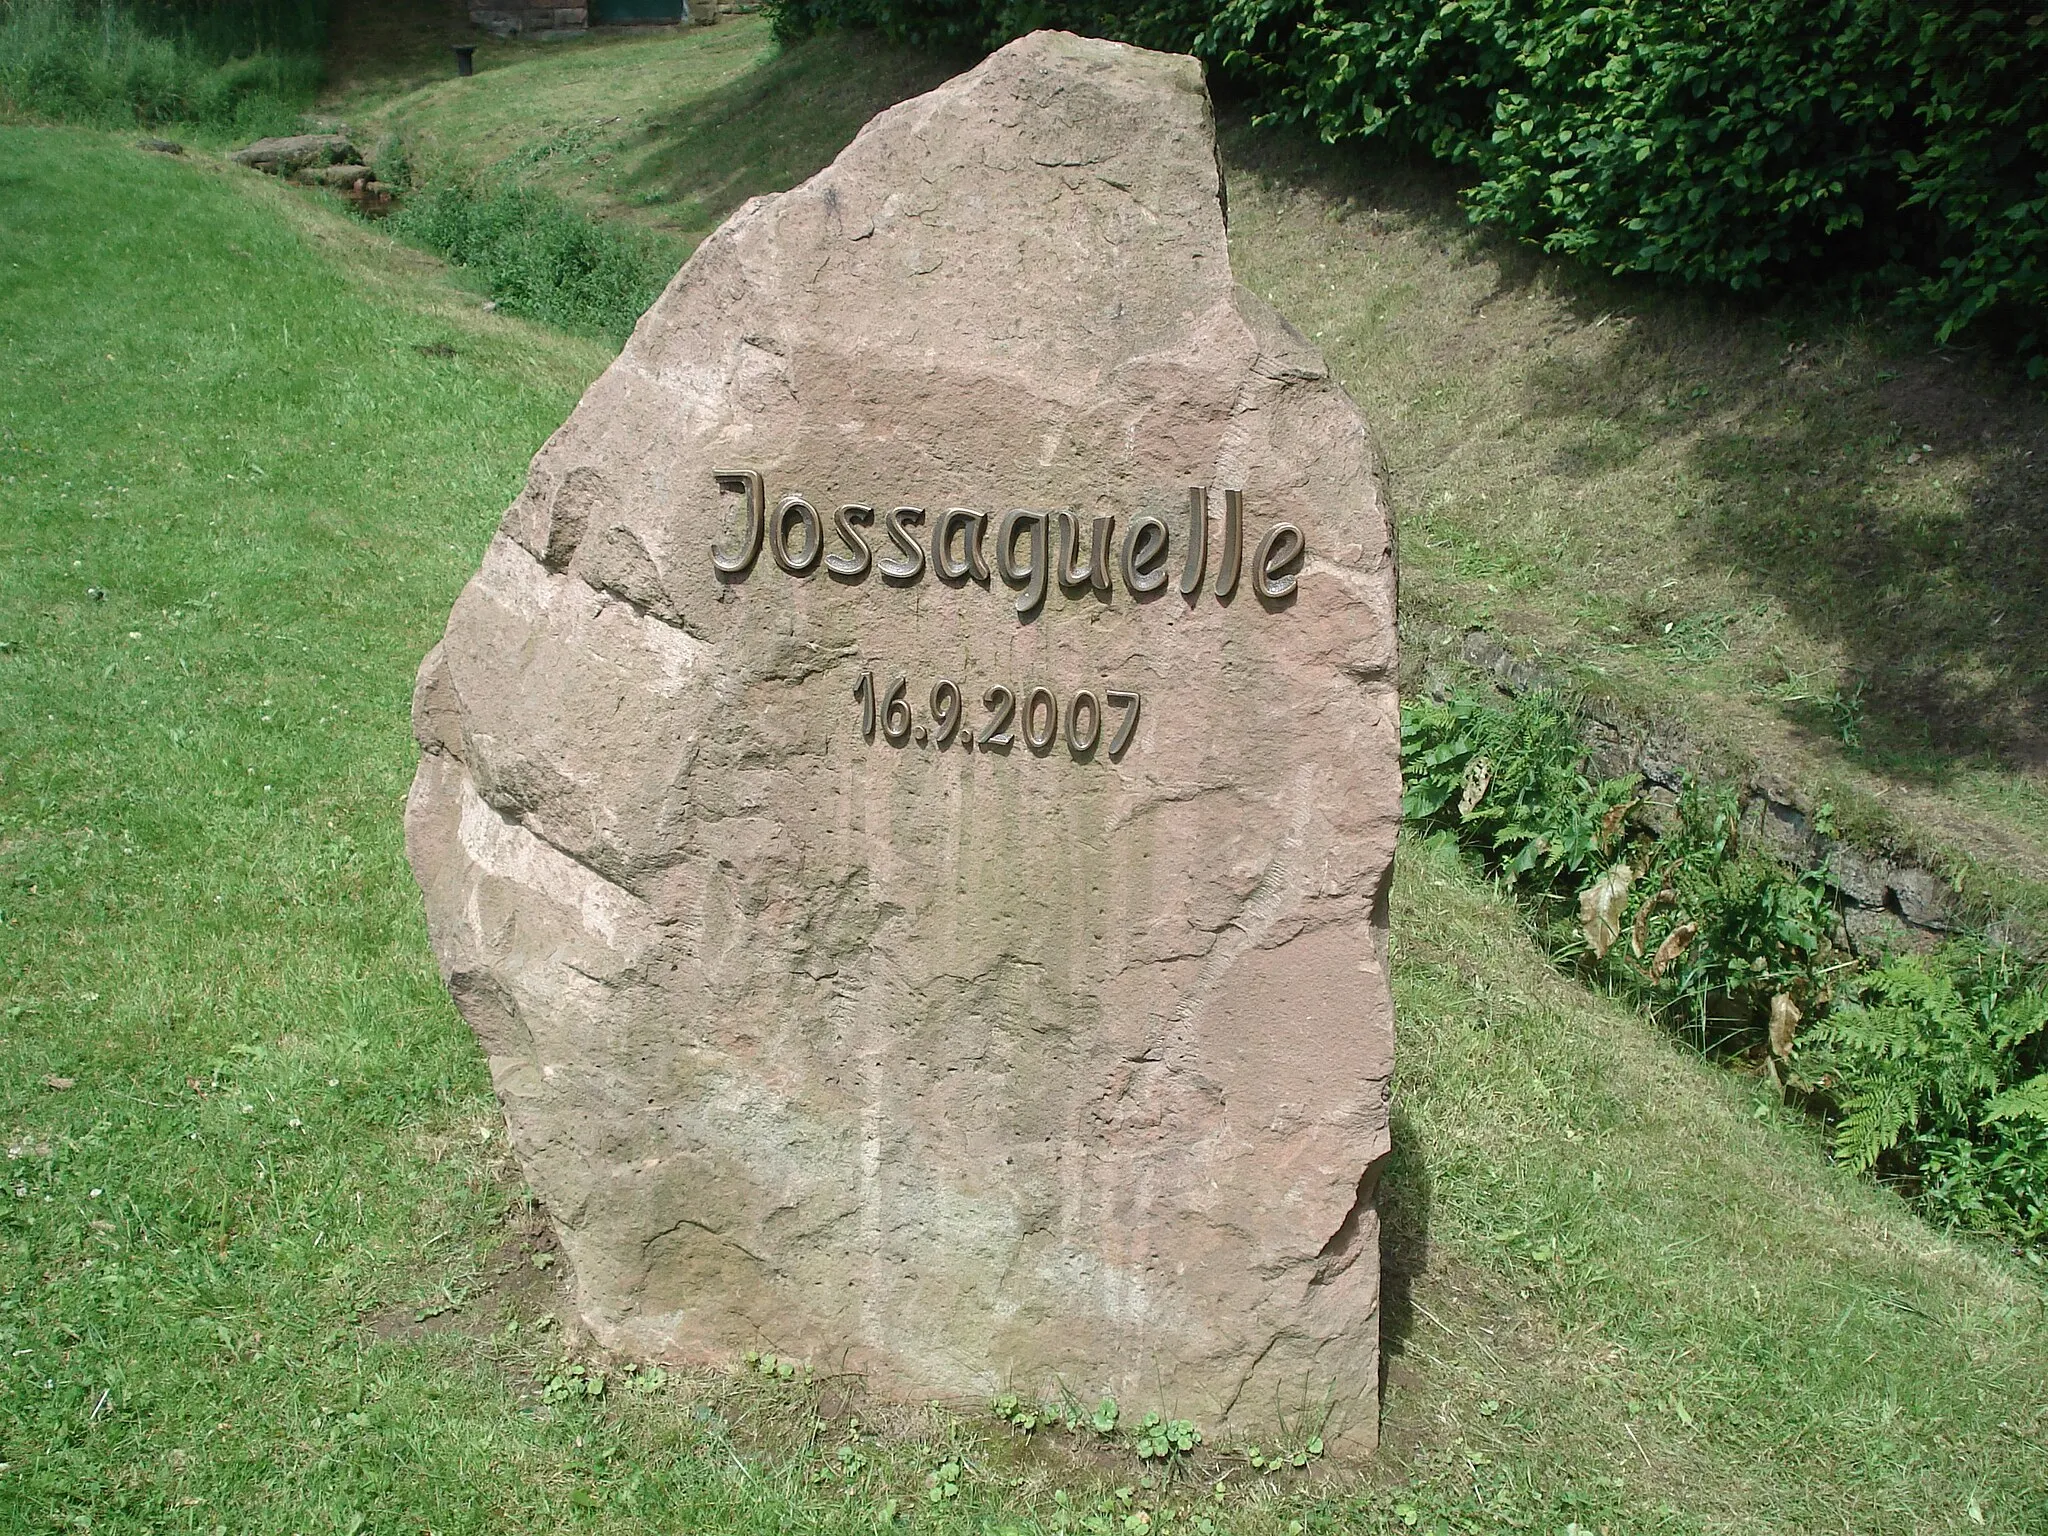 Photo showing: an der Jossaquelle in Lettgenbrunn